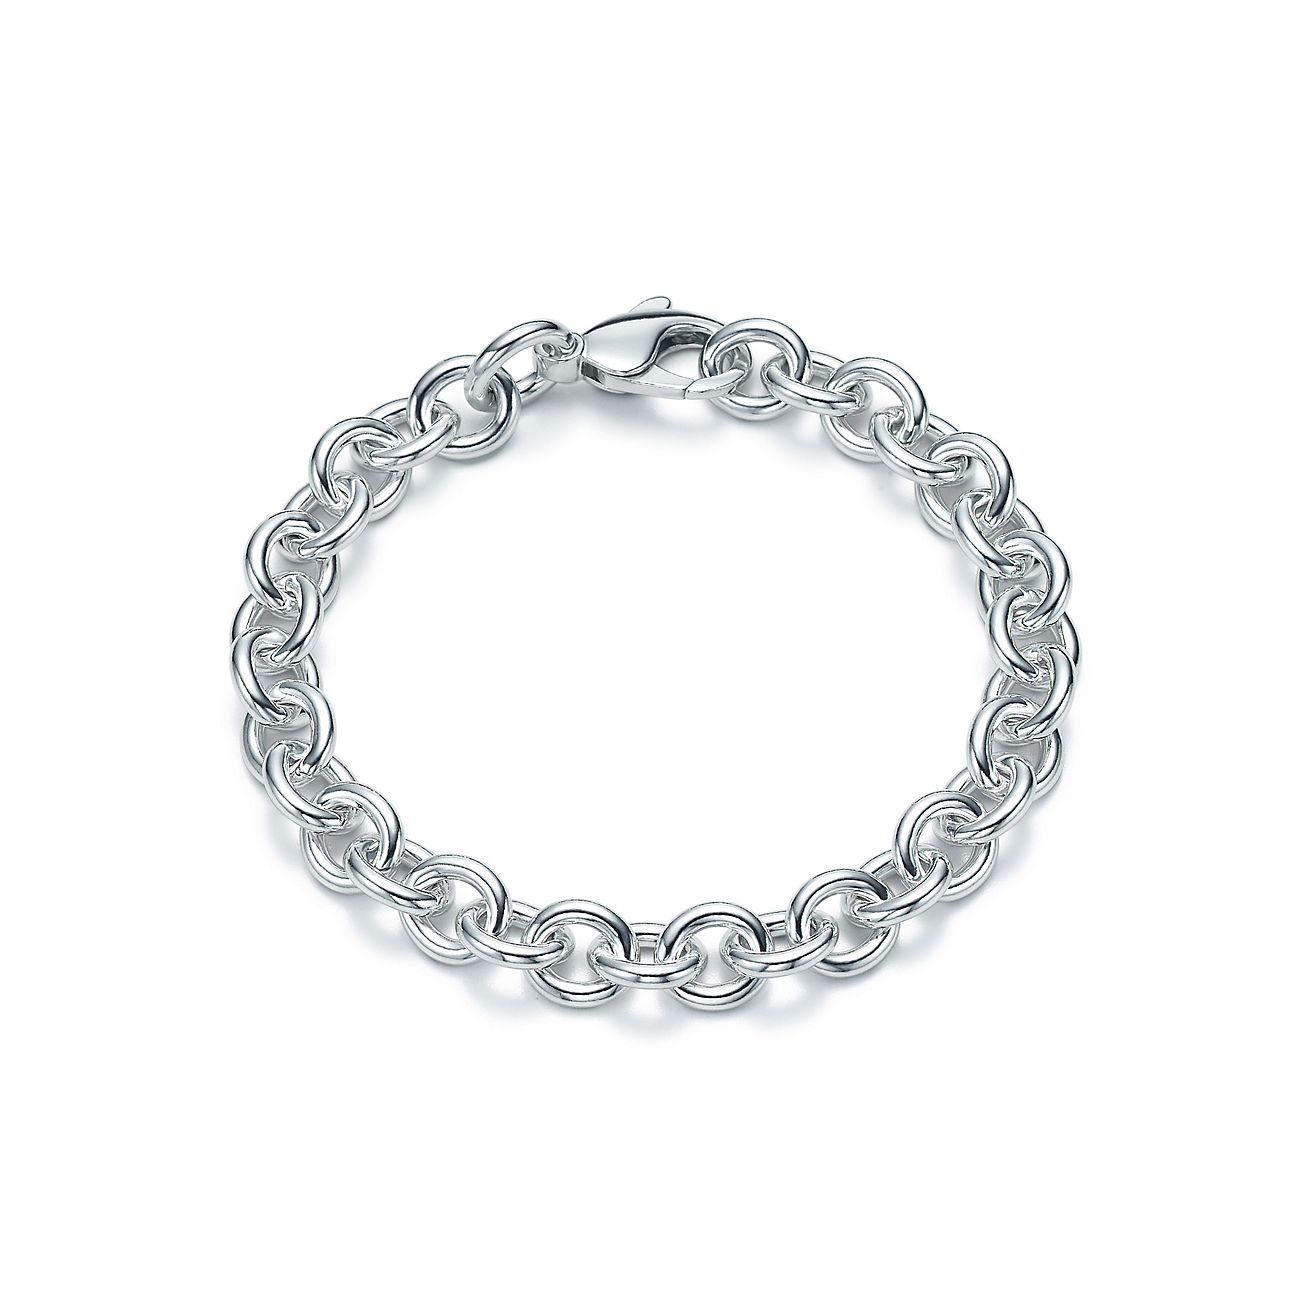 Medium round link bracelet in sterling 